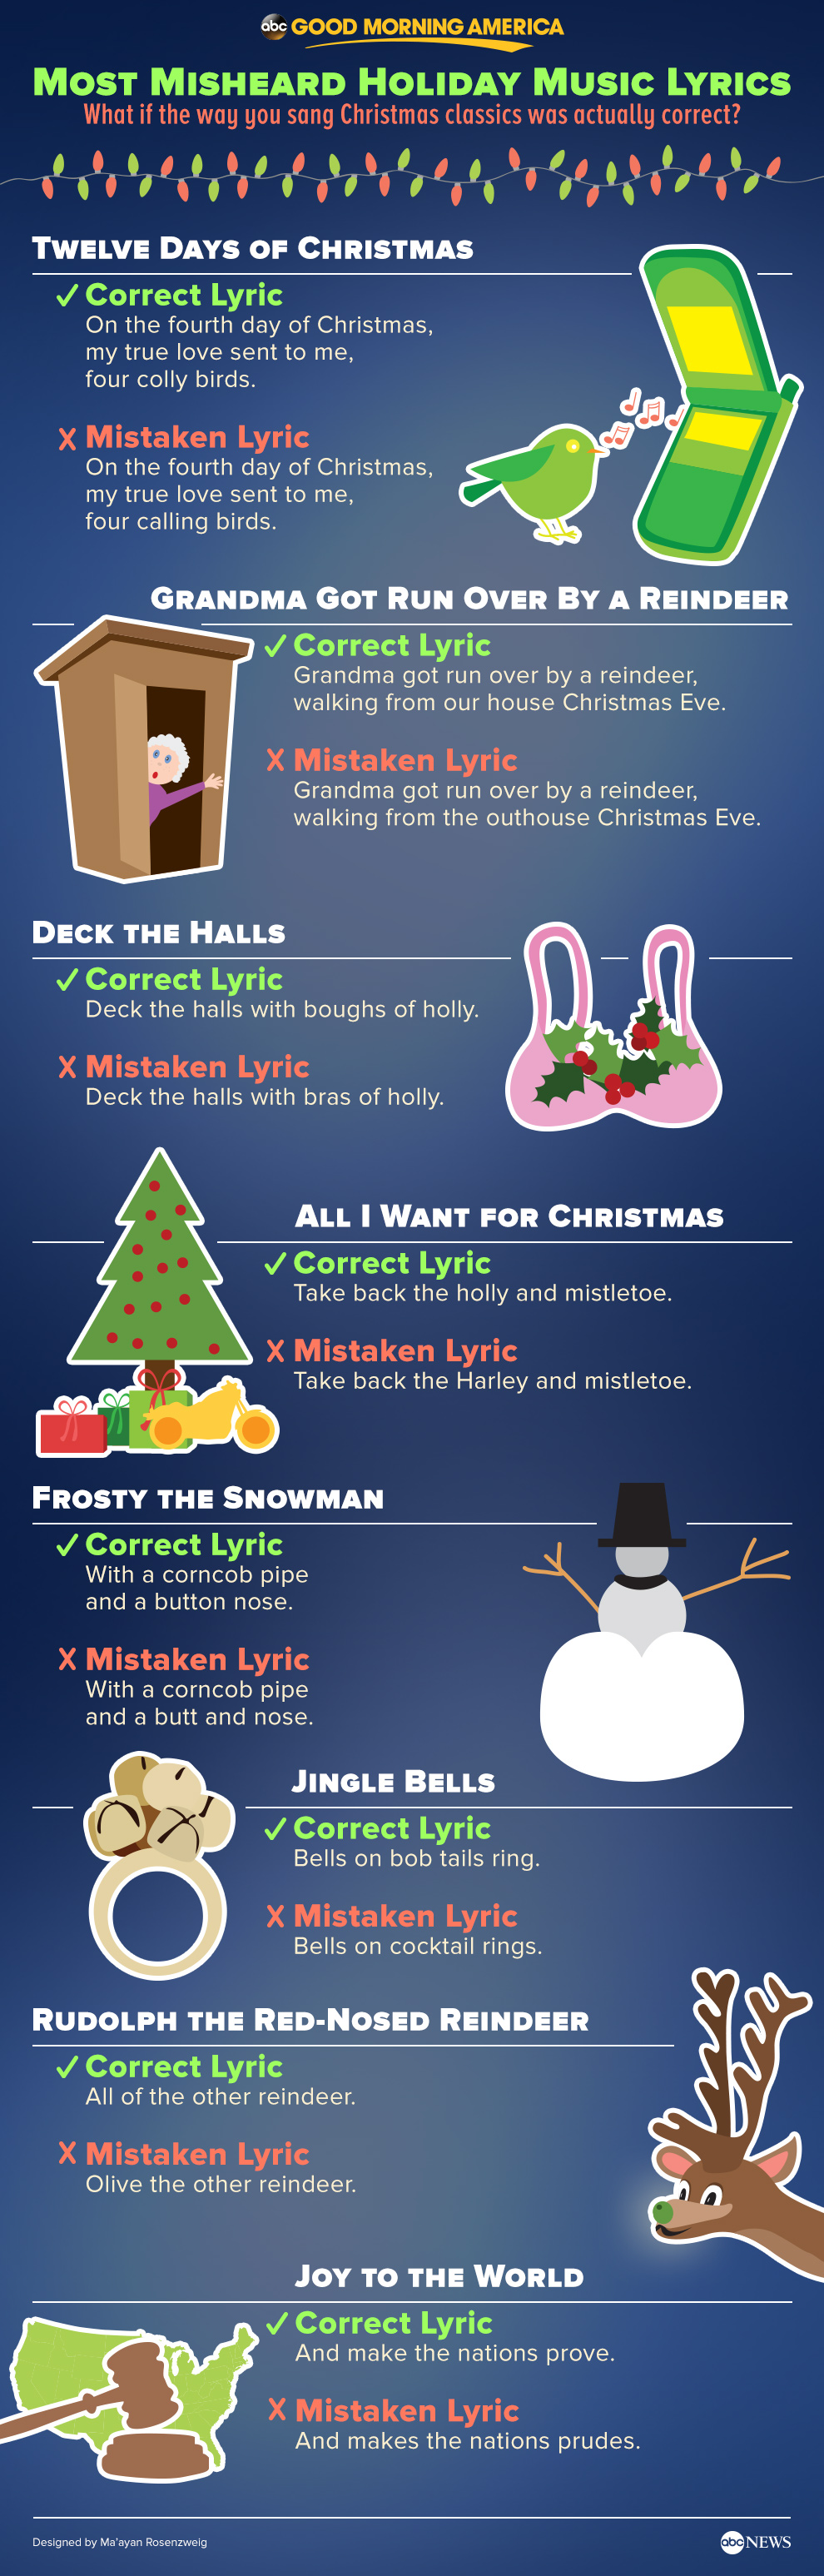 Most Misheard Christmas Song Lyrics - ABC News